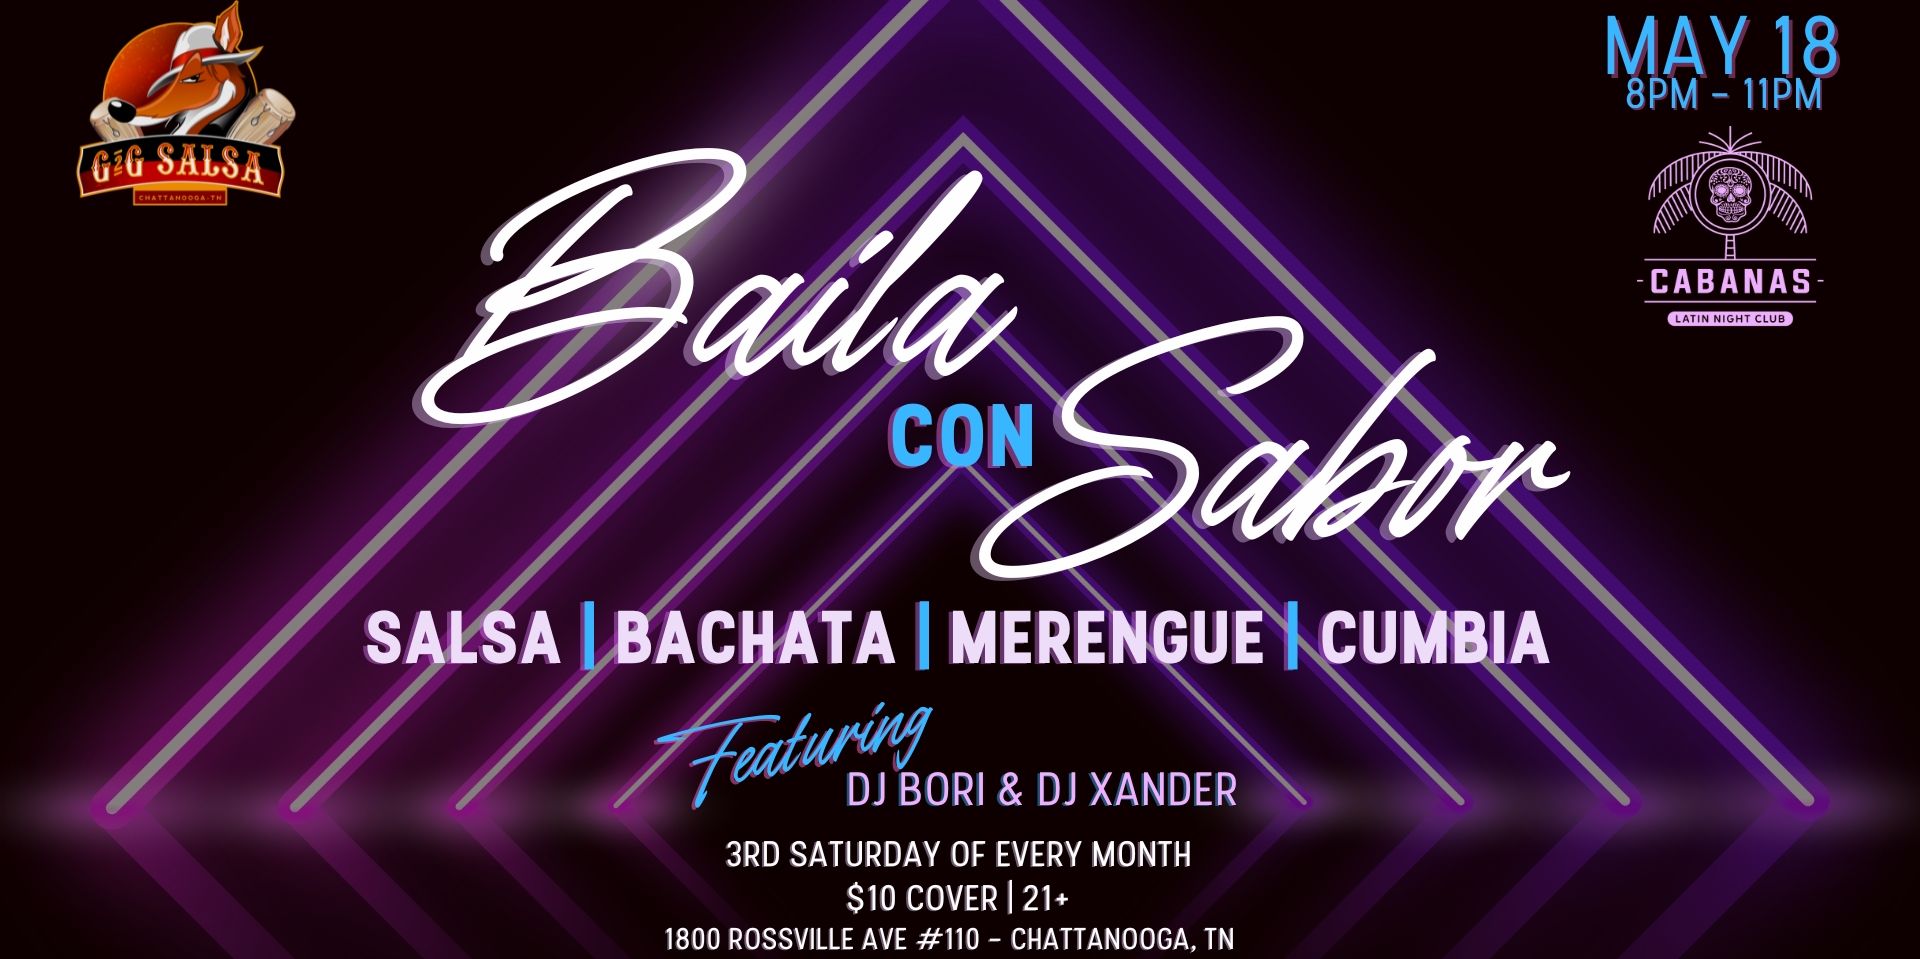 Baila con Sabor @ Cabanas Night Club promotional image